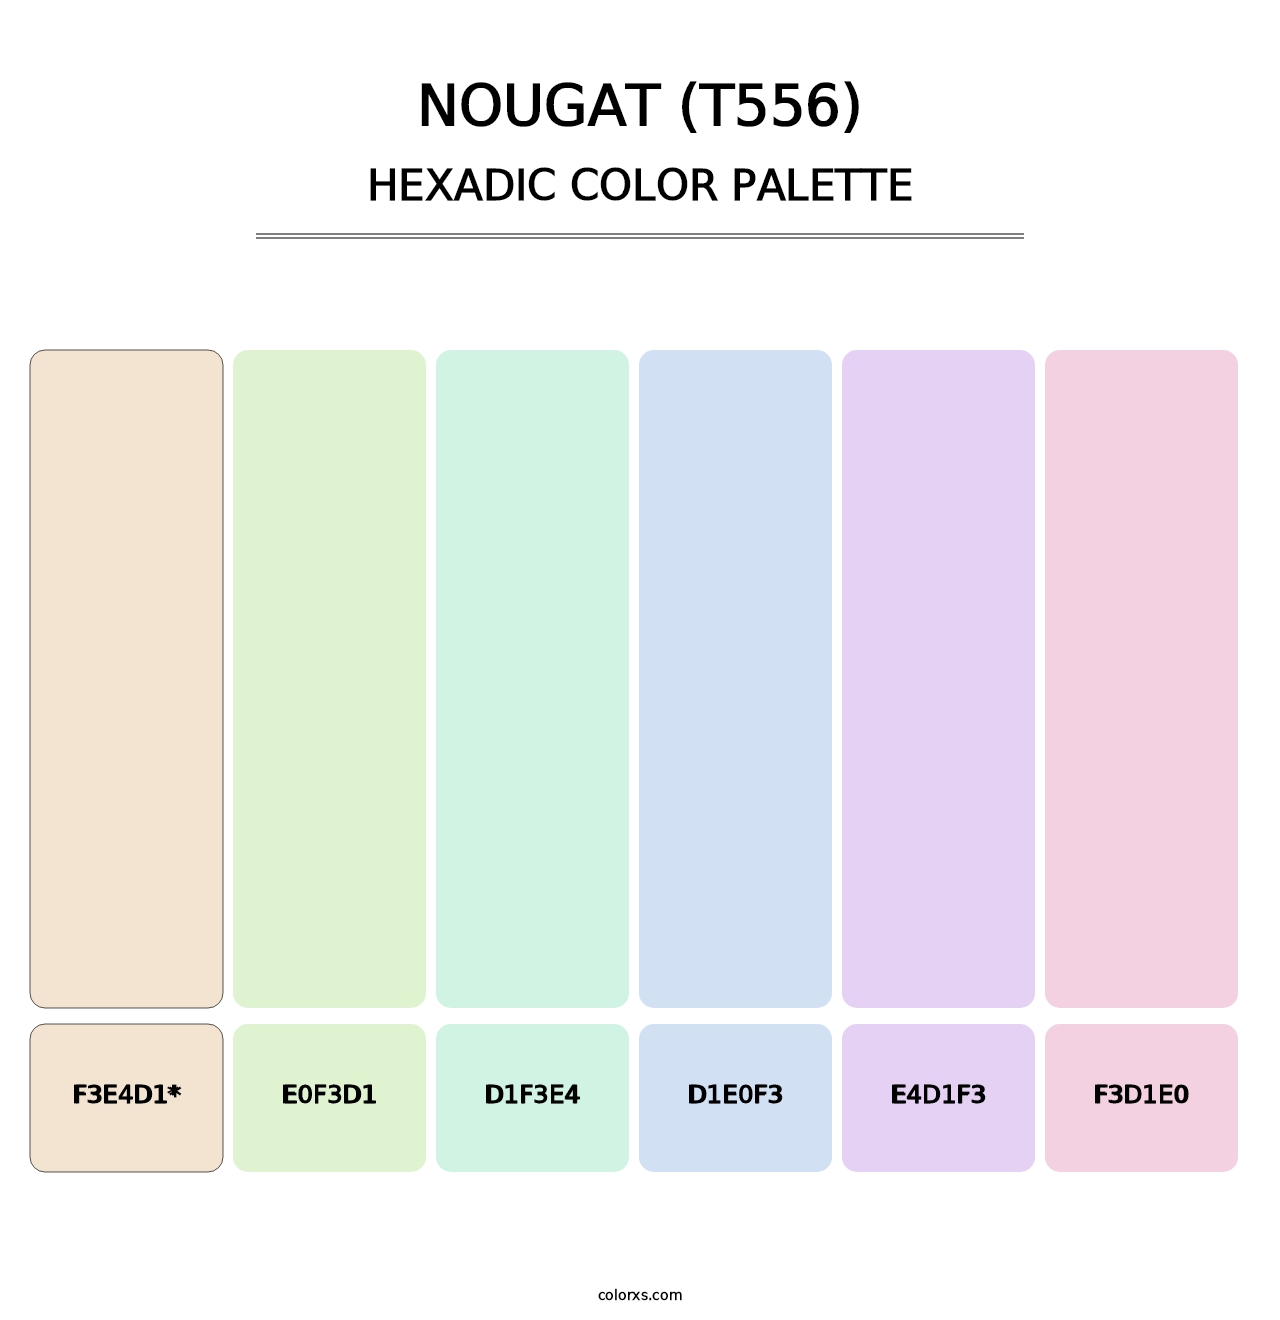 Nougat (T556) - Hexadic Color Palette